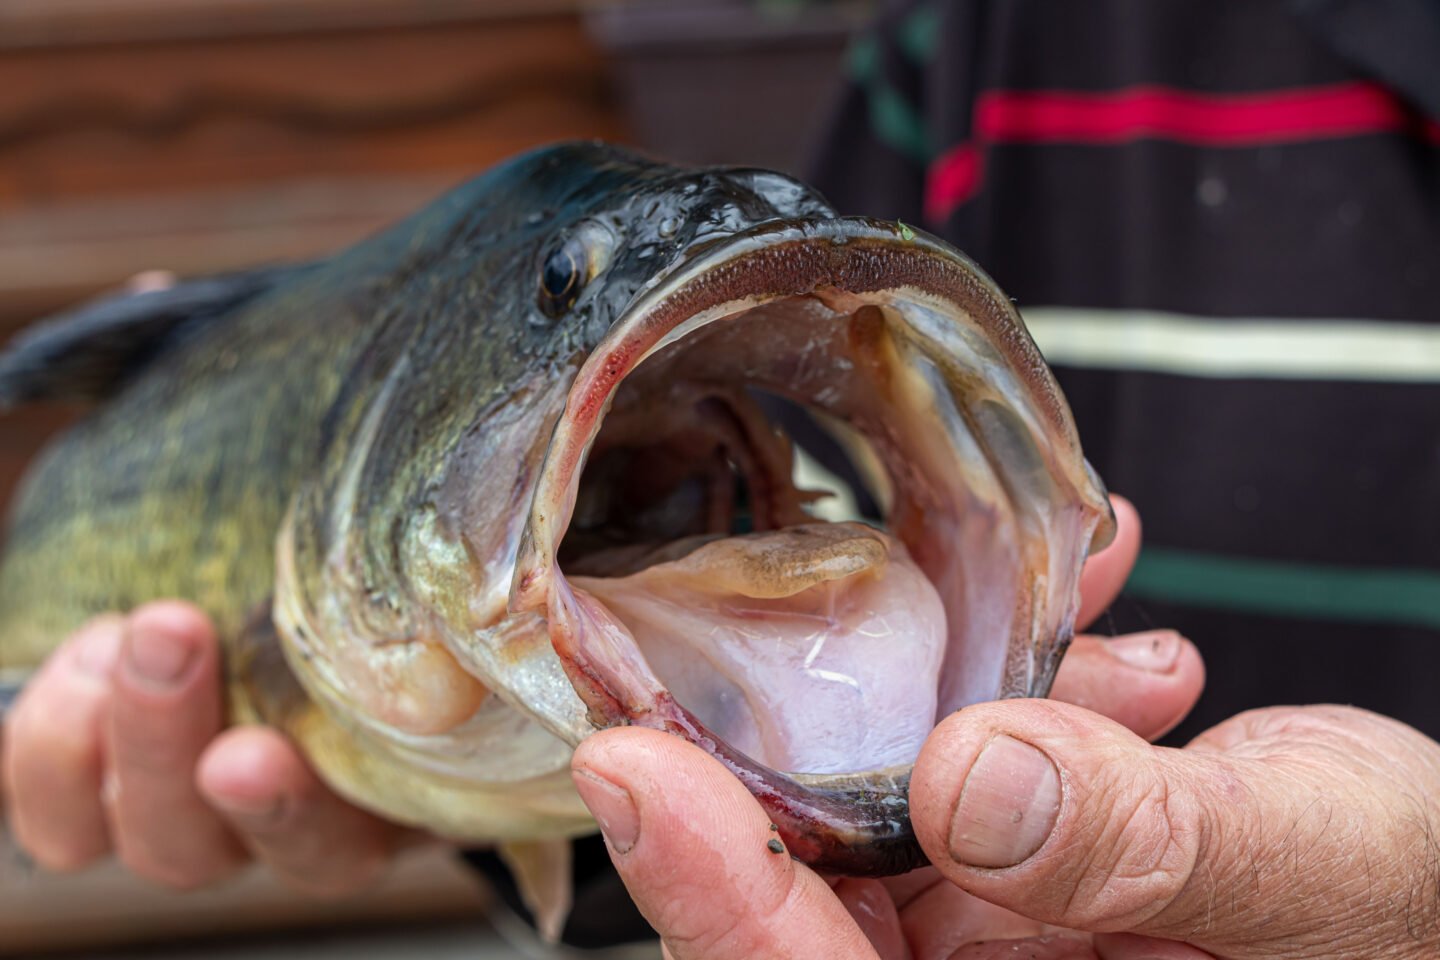 largemouth bass open mouth